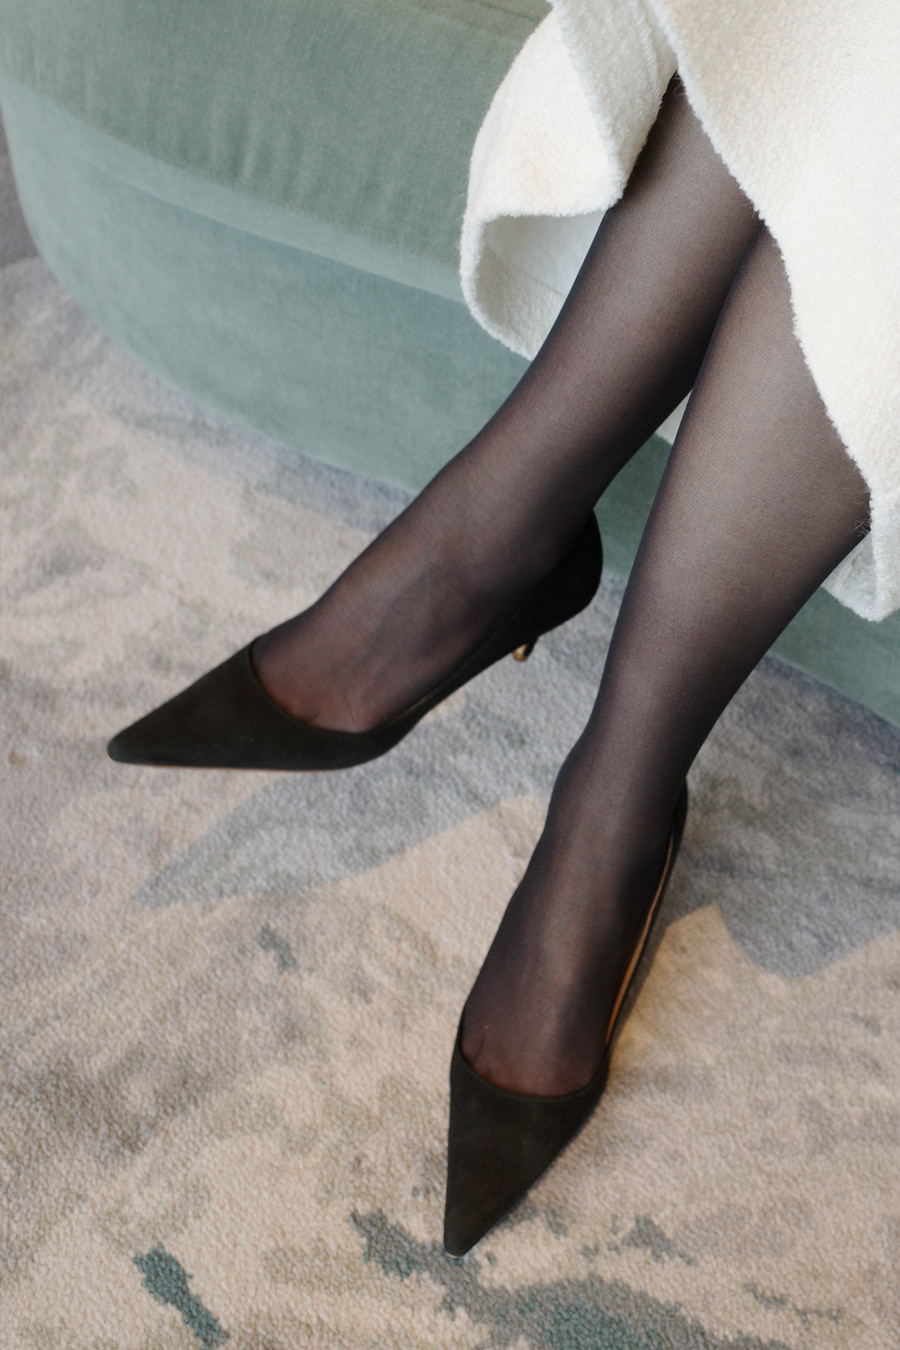 [DGSAC36] 20D Glass stockings